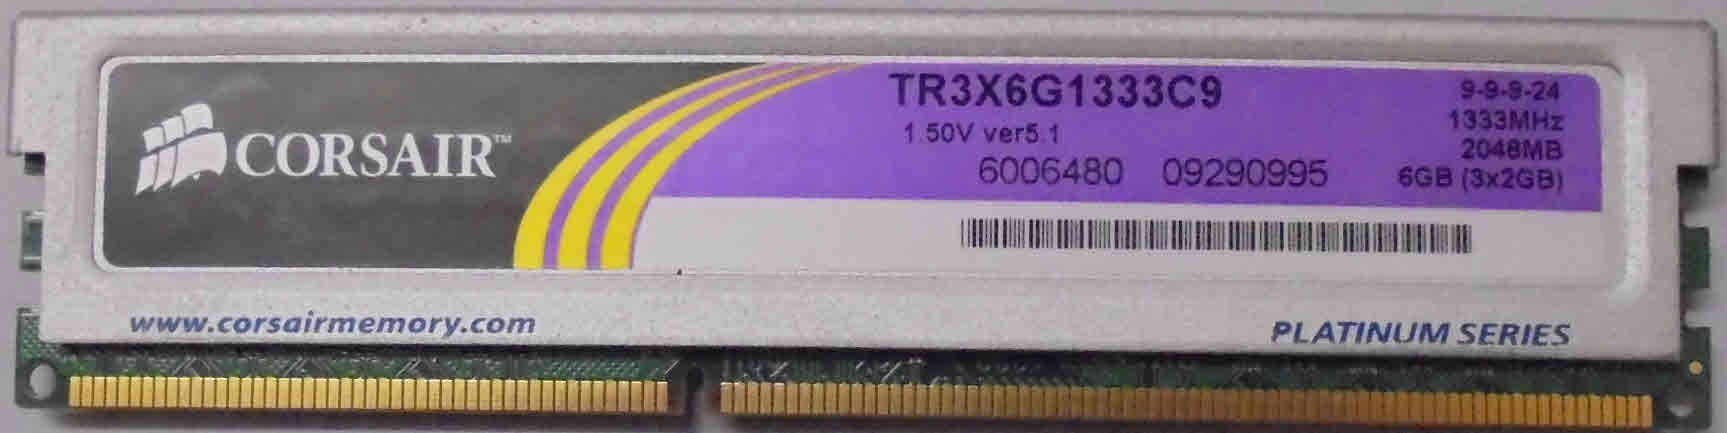 2GB 2Rx8 PC3-10600U Corsair Platinum